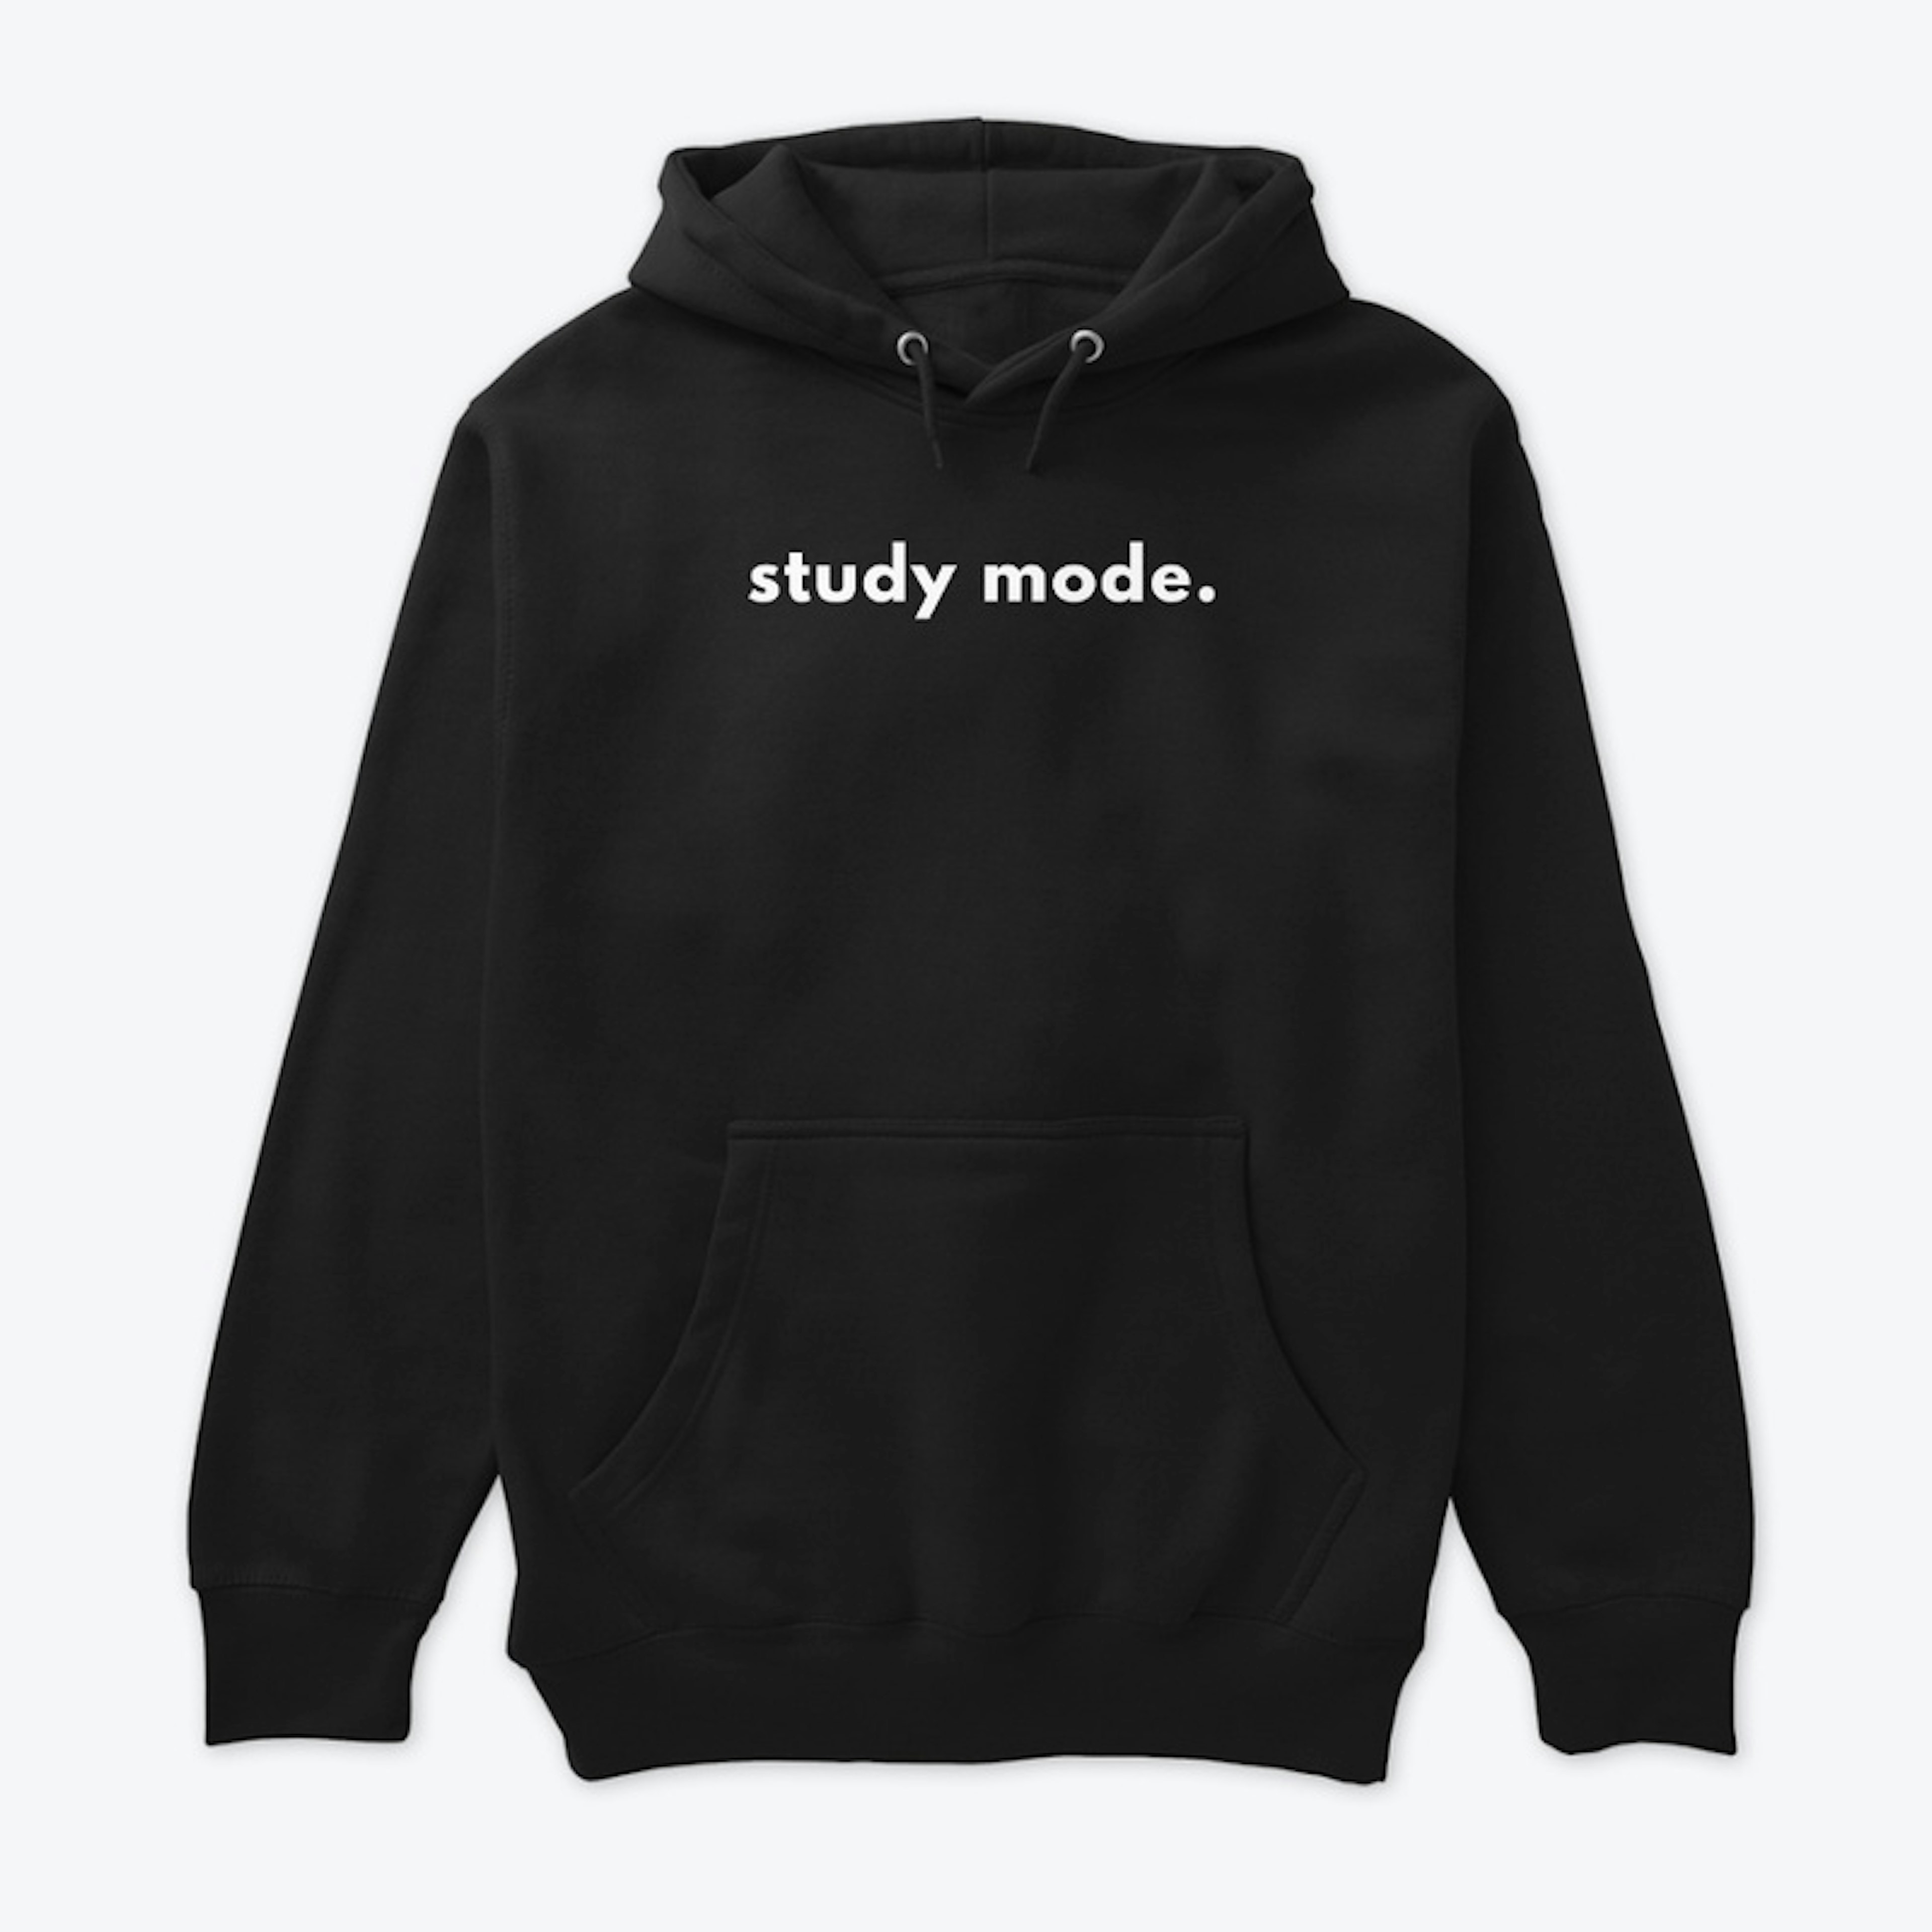 study mode